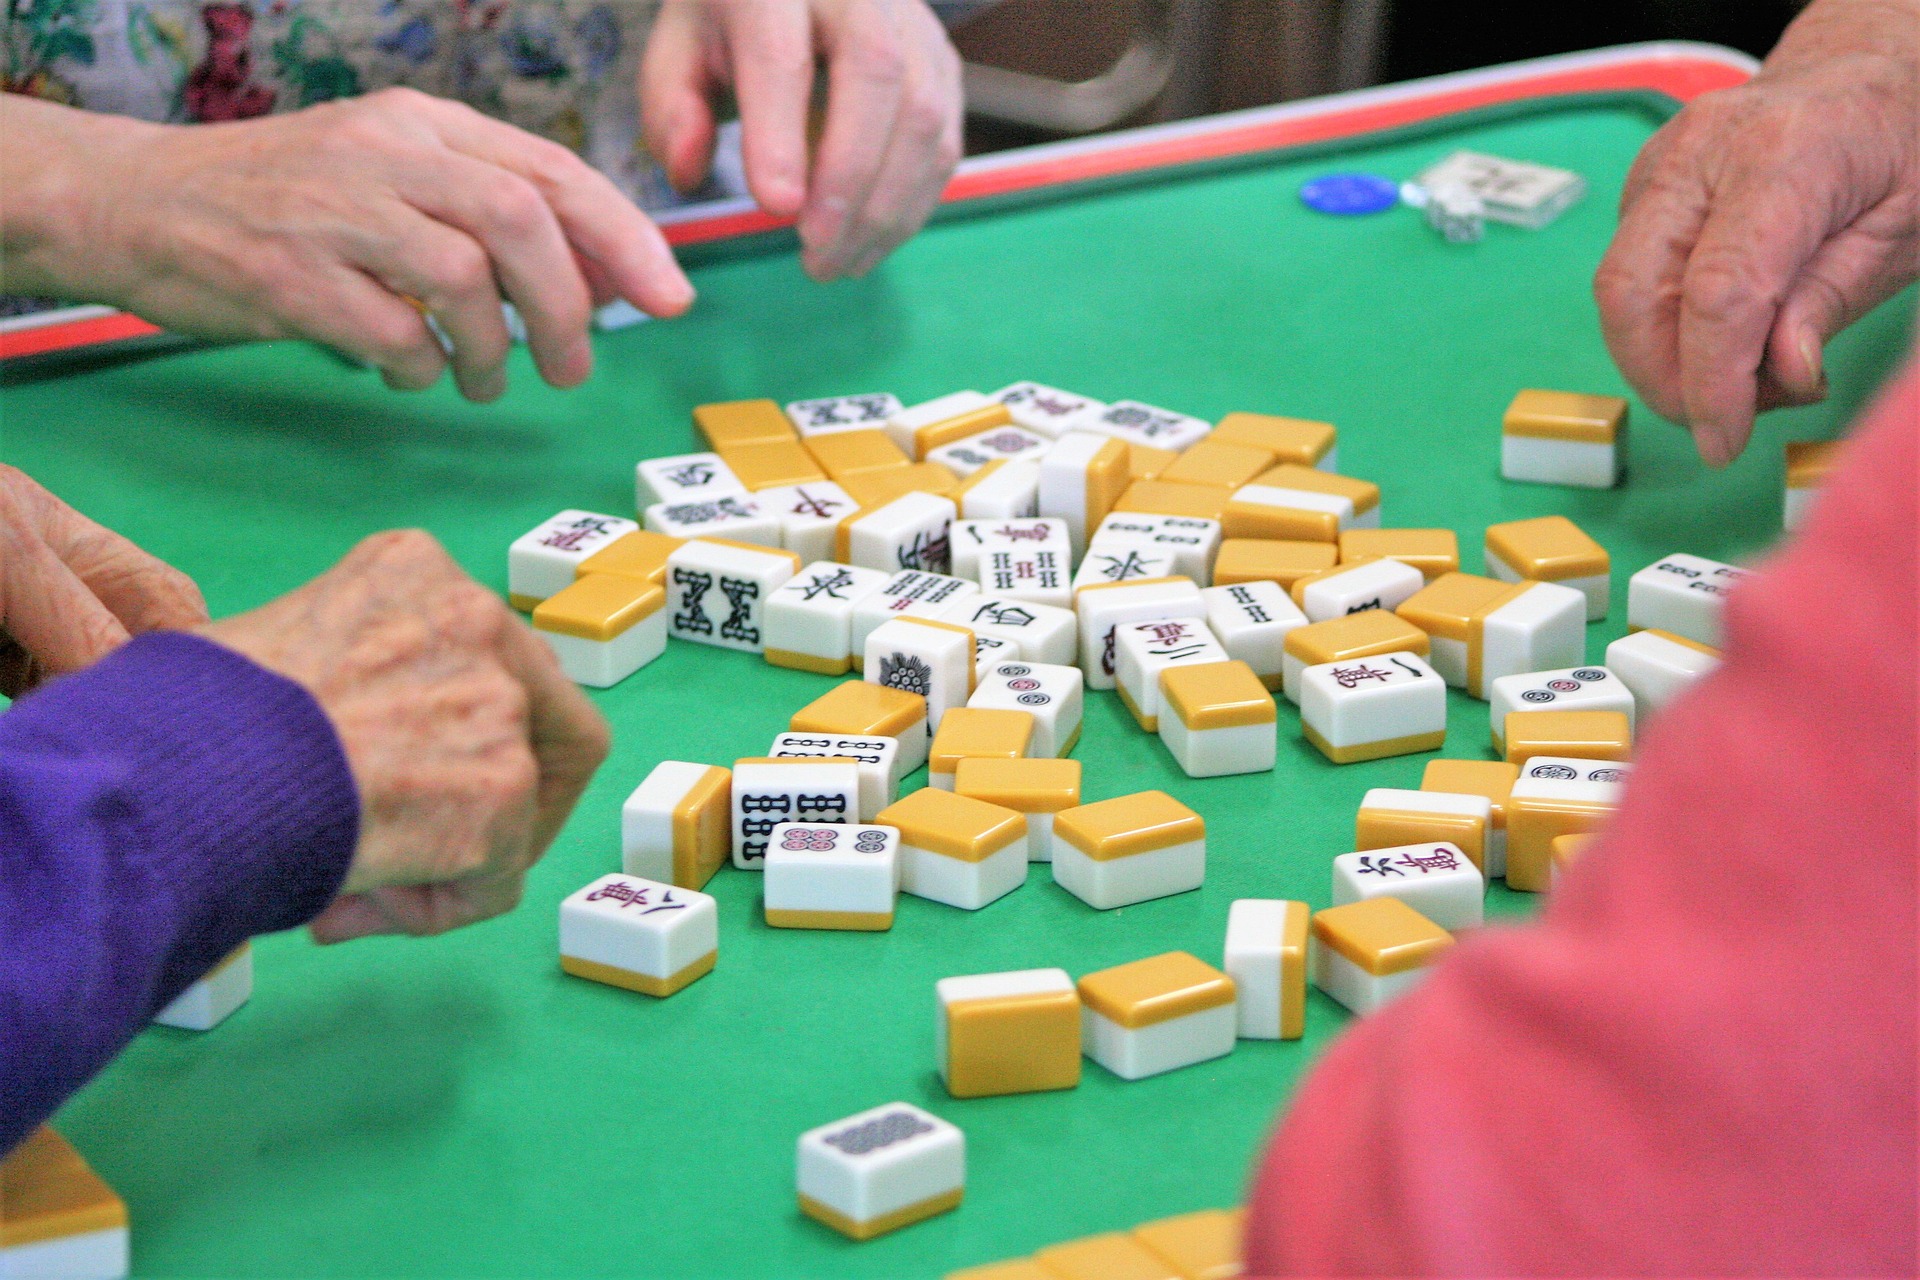 Learn Chinese by playing Mahjong 麻將 (májiàng)